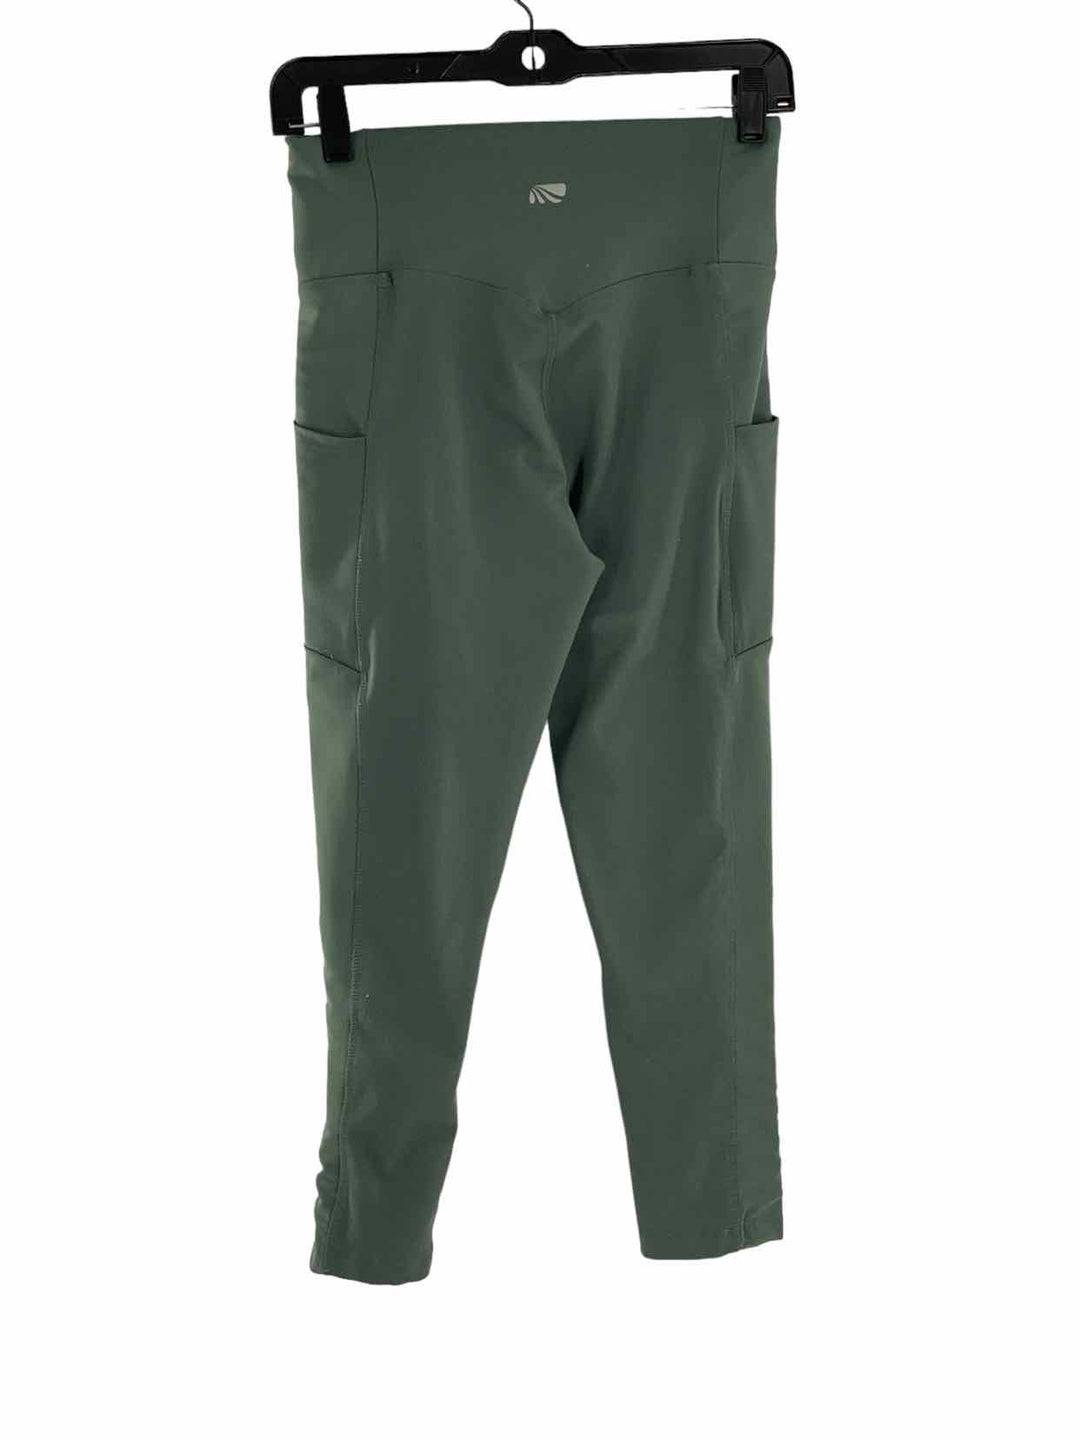 Marika Size S Sage Green Athletic Pants